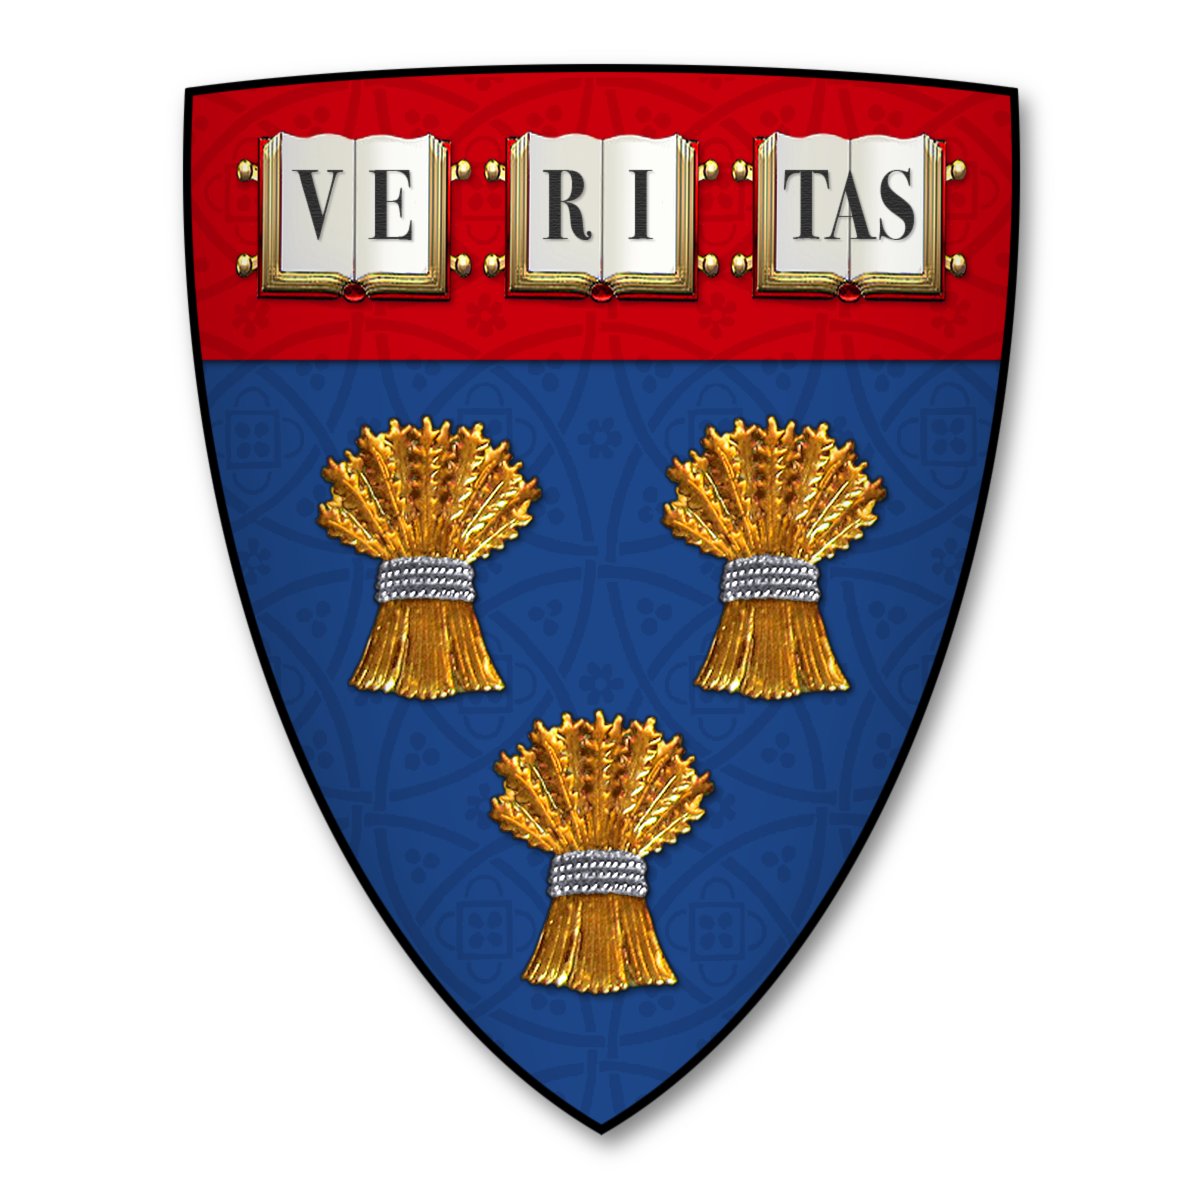 Former Harvard Law School crest